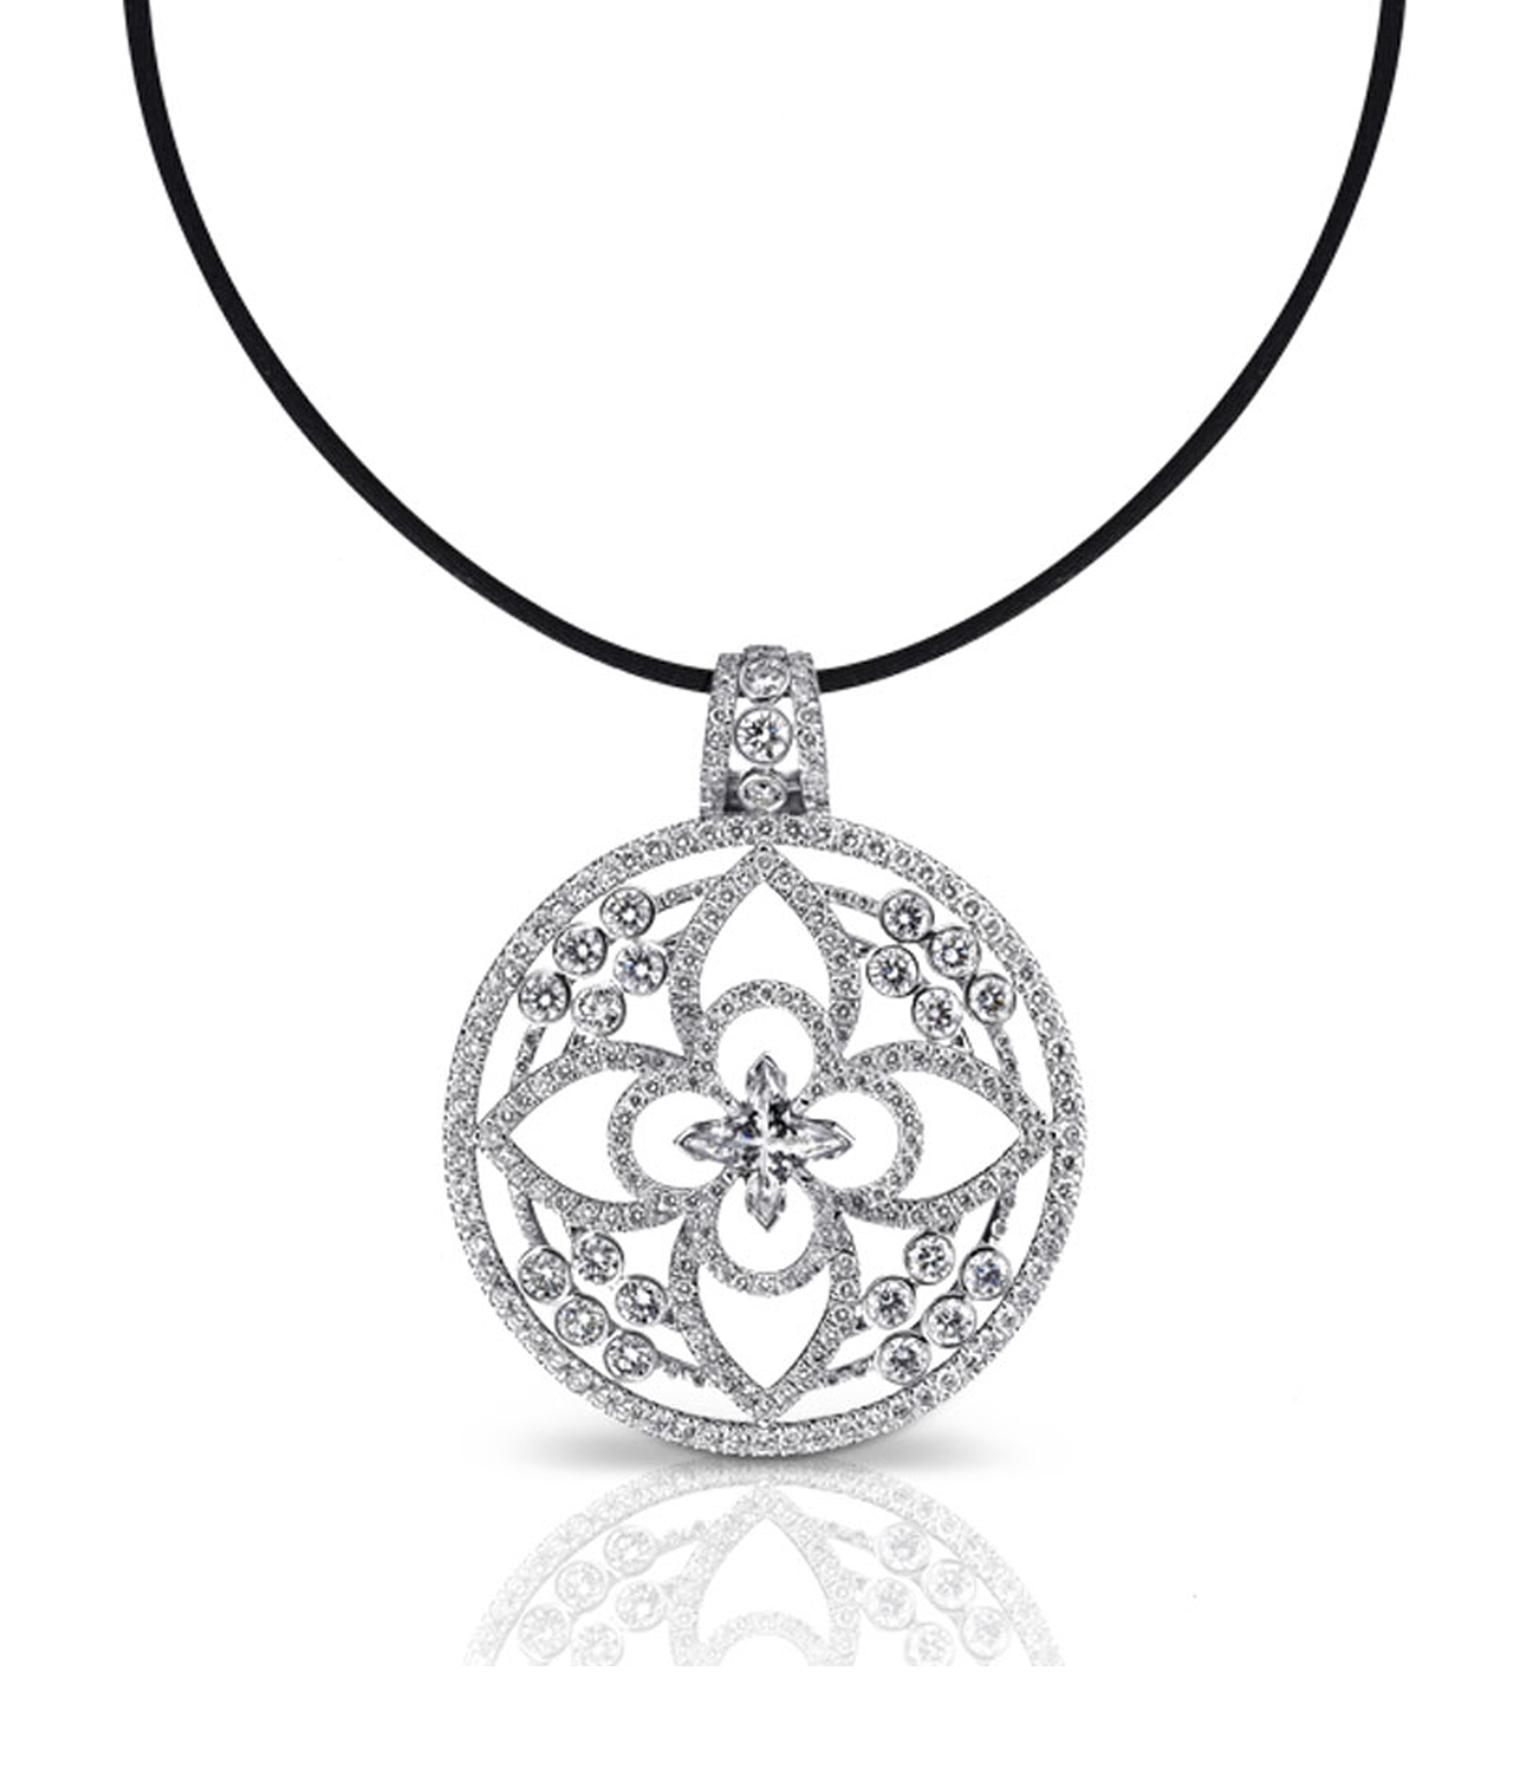 Louis Vuitton, Jewelry, Louis Vuitton Monogram Gold Diamond Necklace